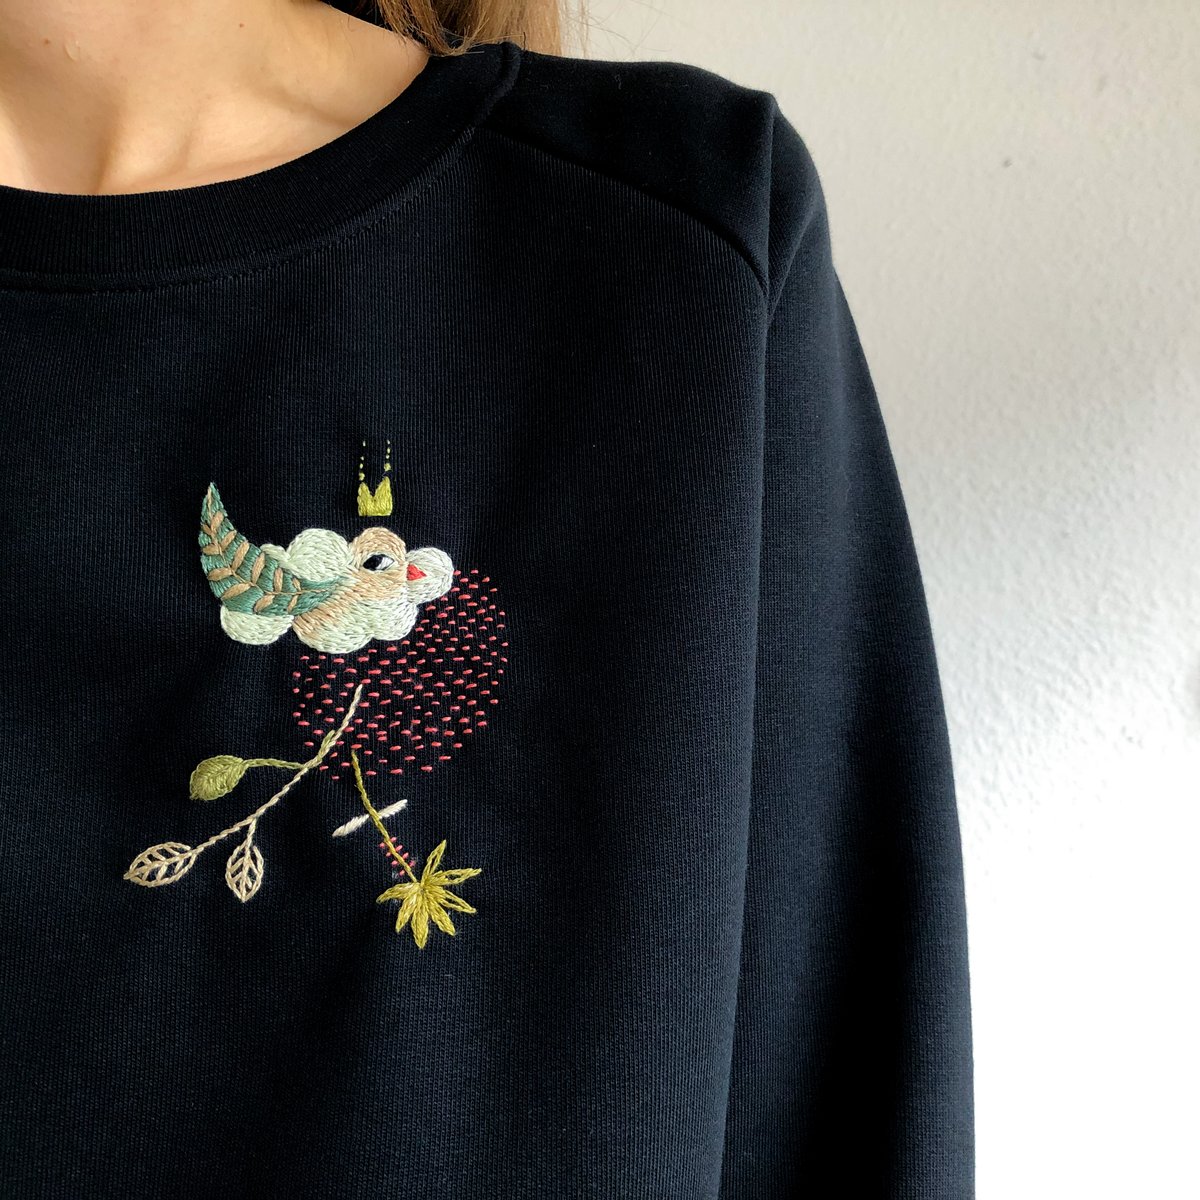 HIJJOO - Sweet embroidery Sweatshirt , plain cotton, Fleece-lined lining 2  types - Codibook.